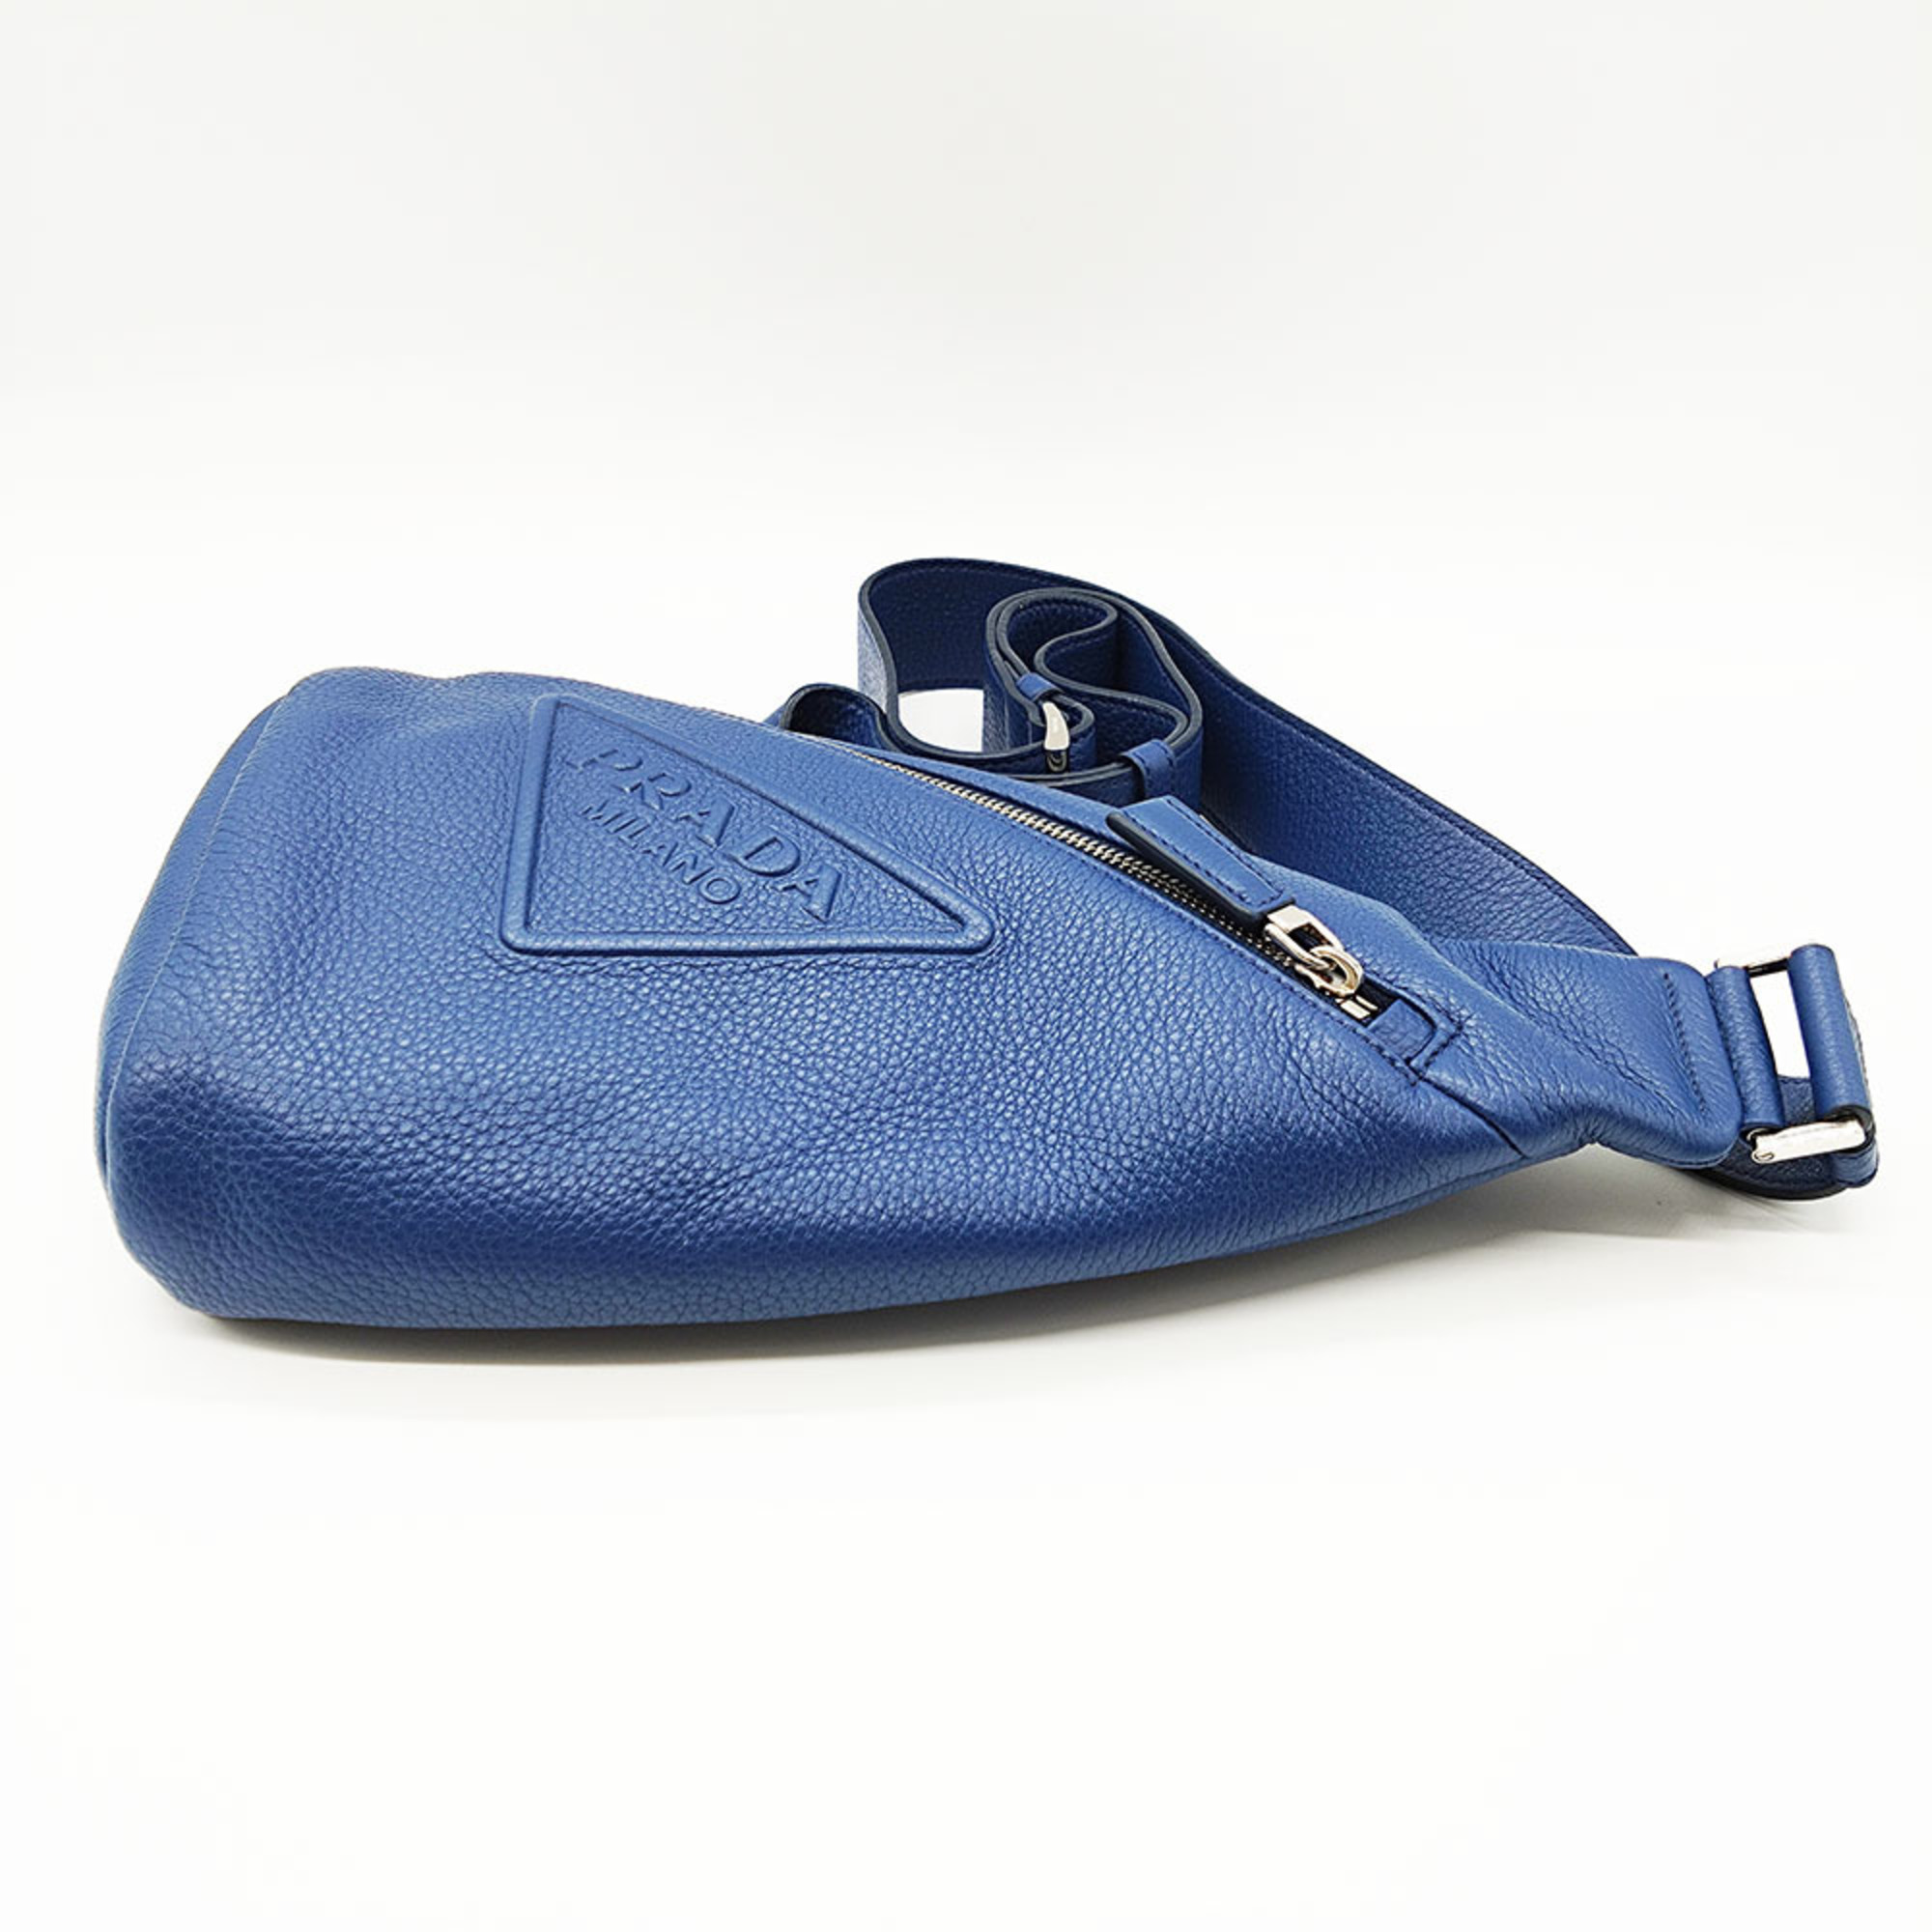 Prada Cross Vitello Dino Body Bag with Embossed Pattern Blue Leather Triangle PRADA